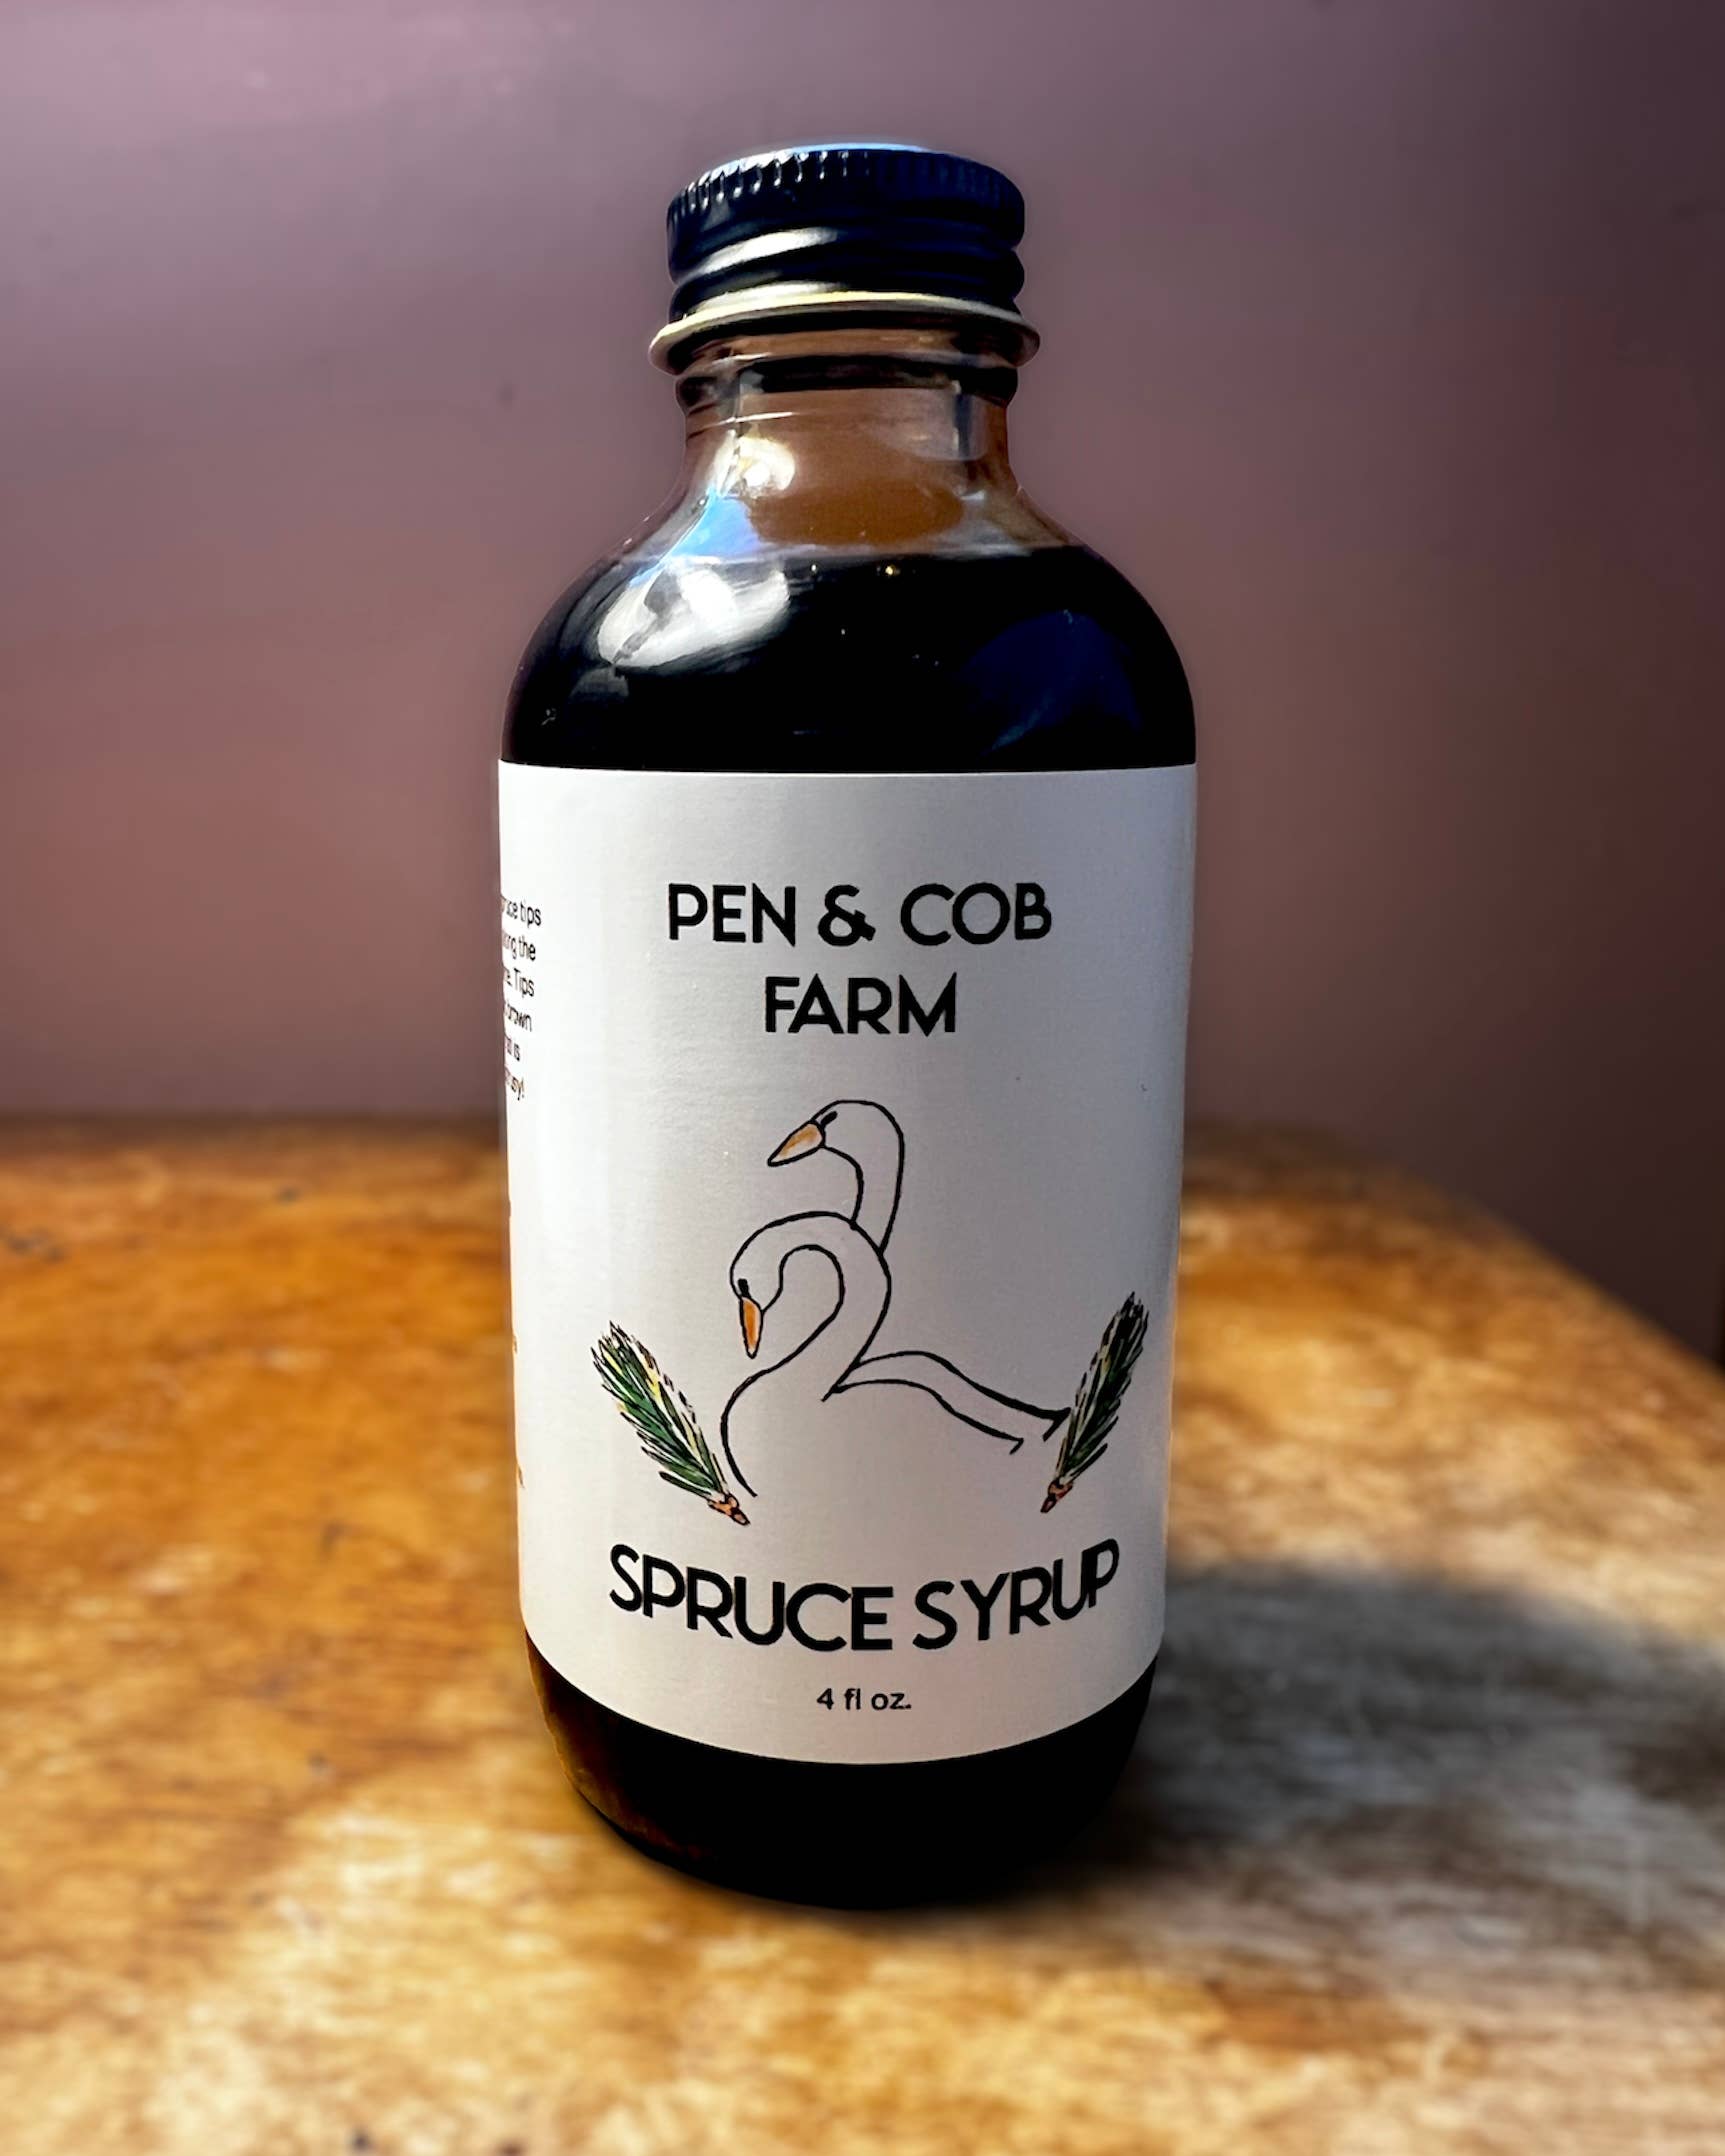 Pen & Cob Farm - Spruce Tip Syrup - Space Camp